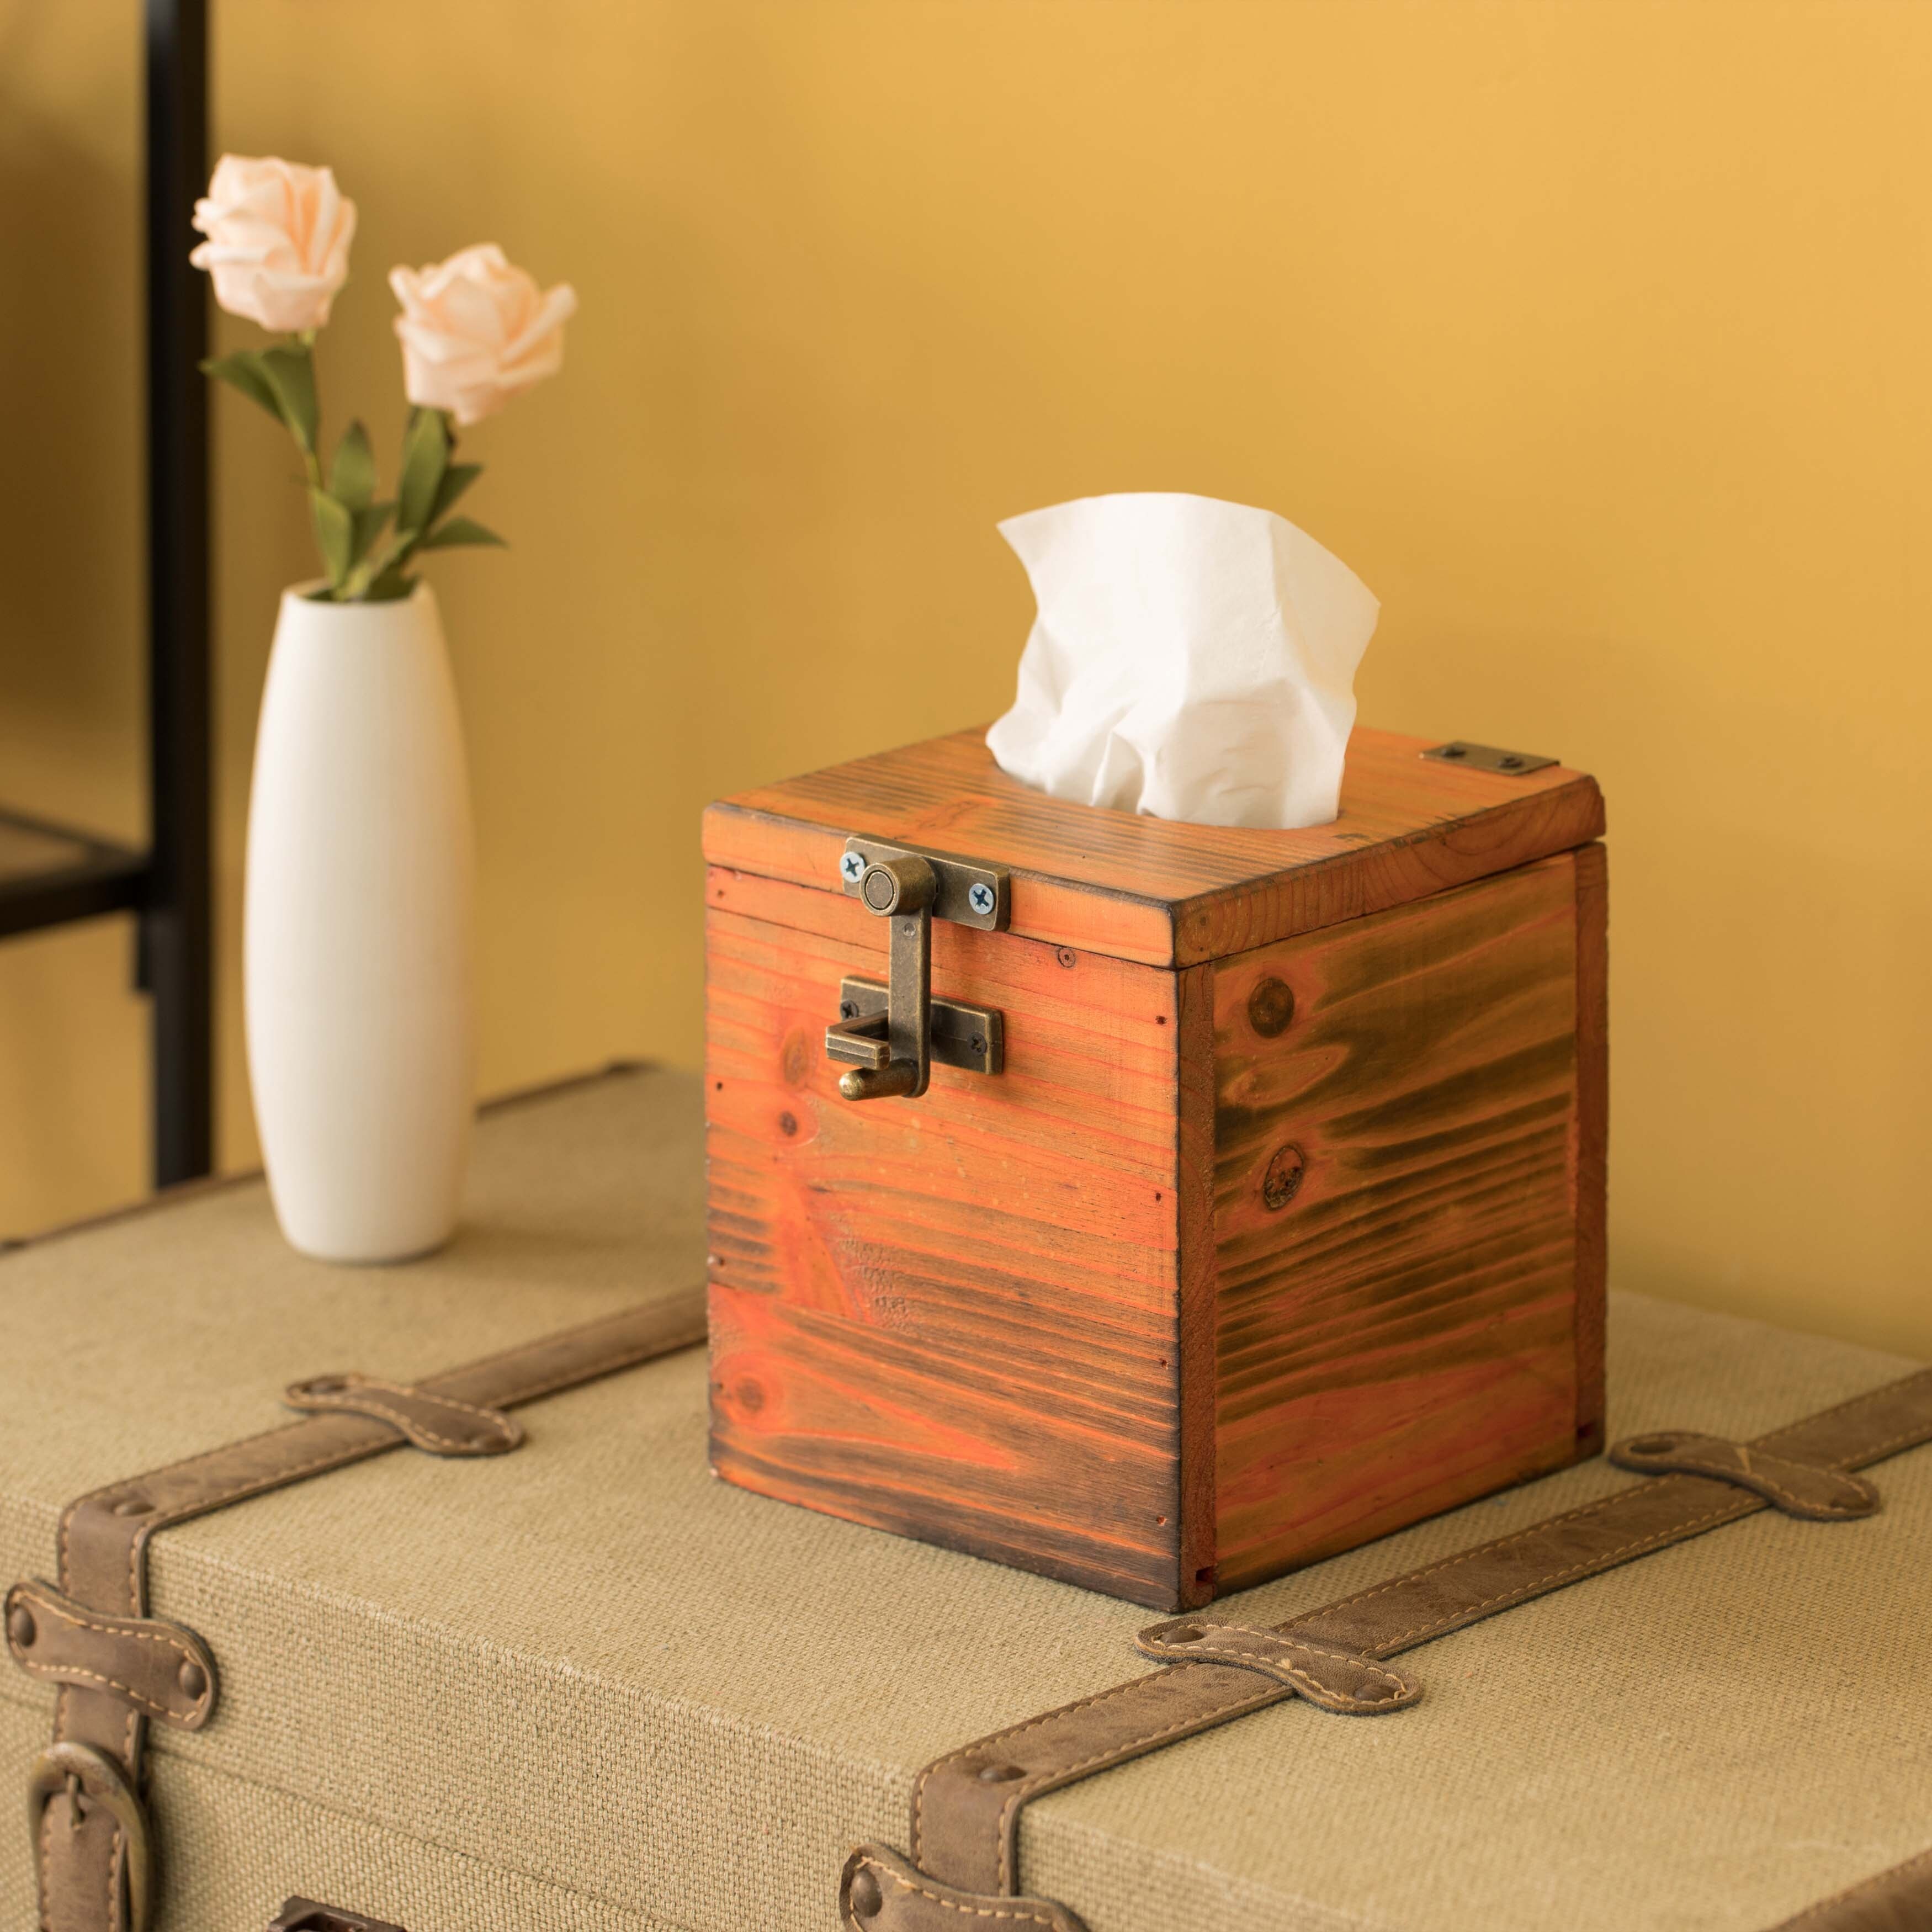 Wood Tissue Box Cover Rectangular - Rustic Farmhouse White Wooden